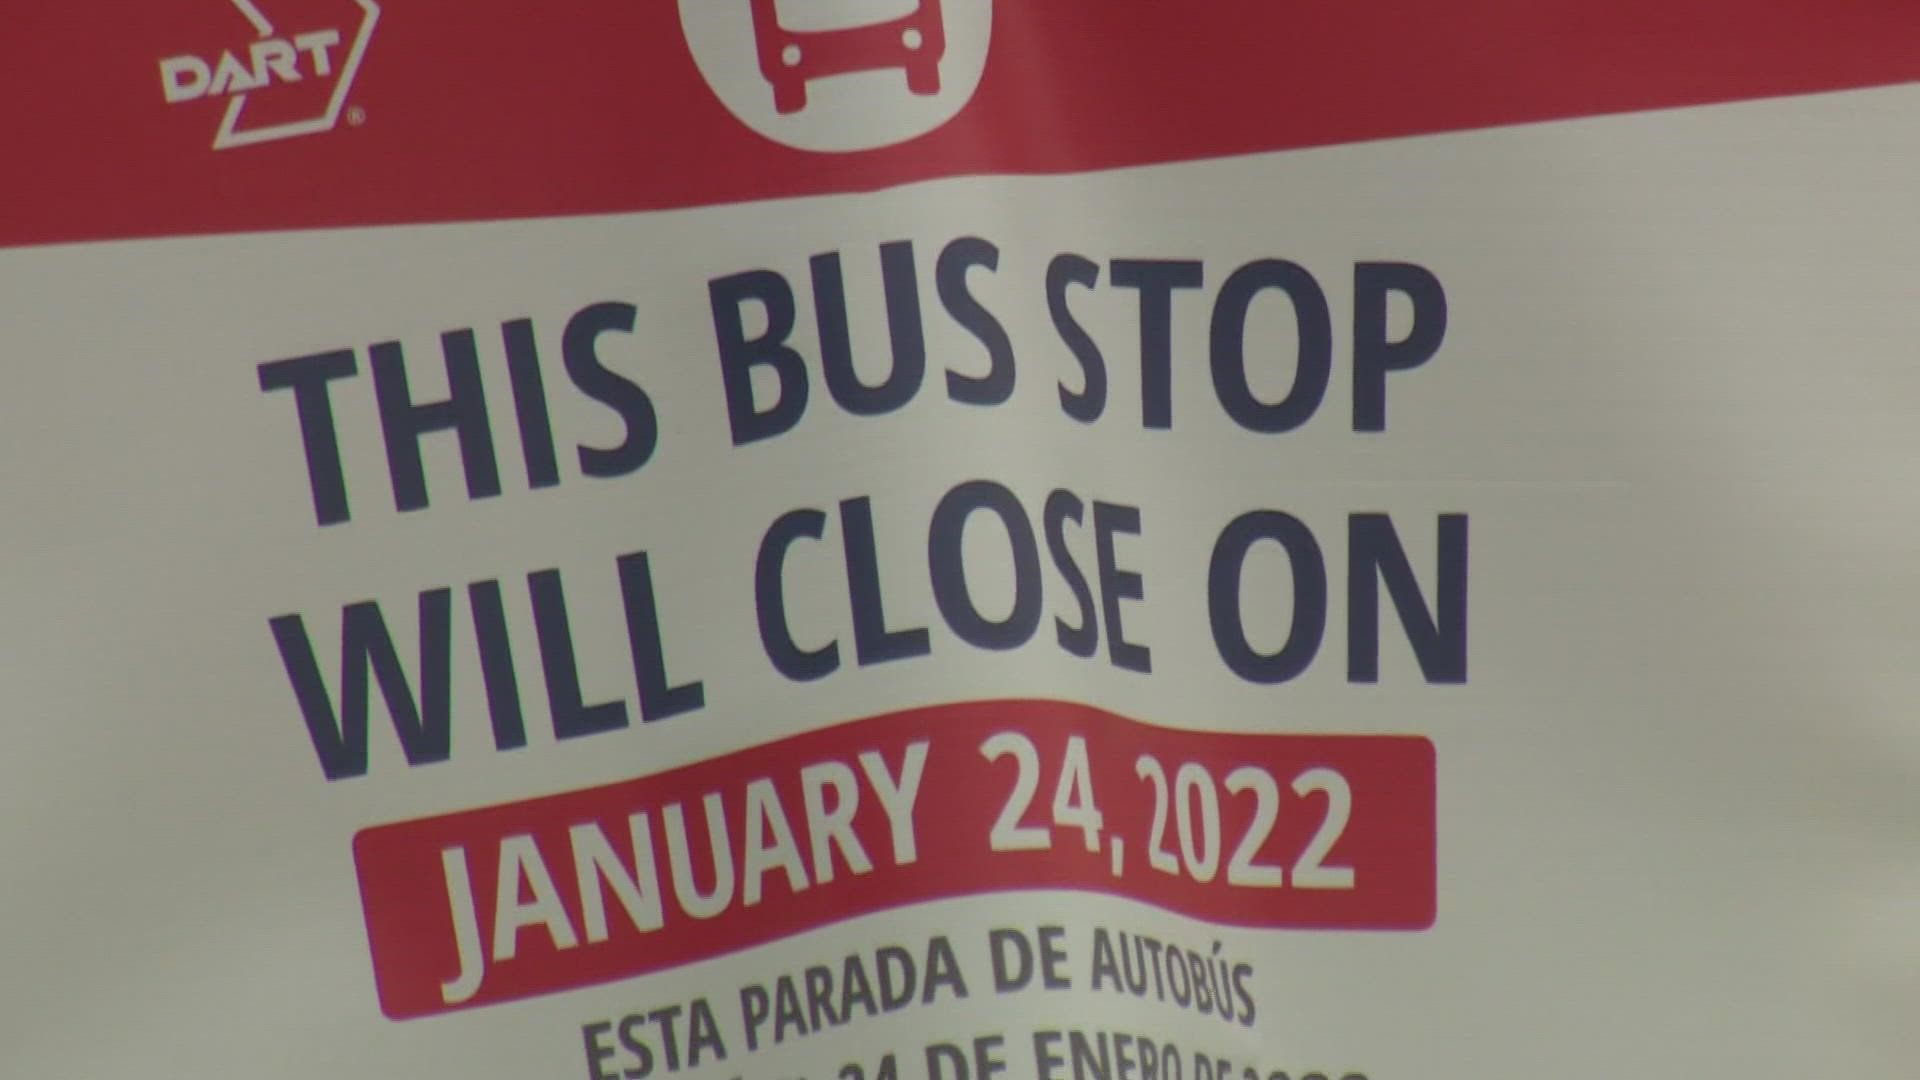 DART is overhauling its bus network, starting next week.